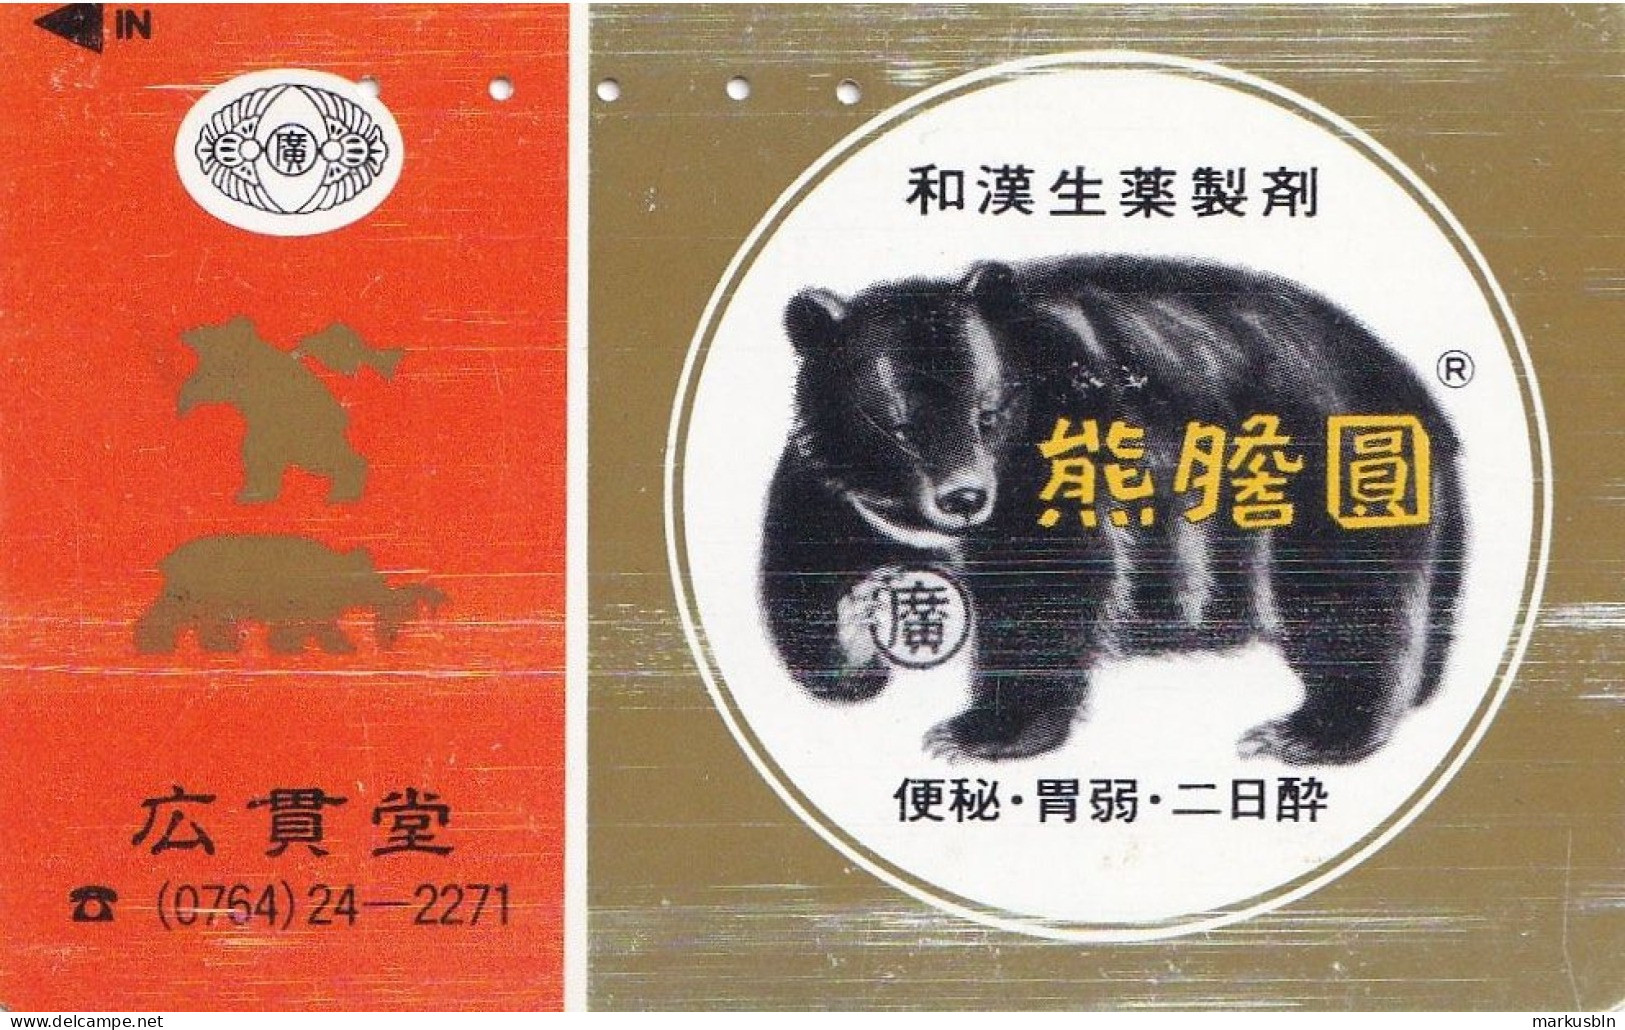 Japan Tamura 50u Old Private 110 - 016 Animal Drawing Bear - Chinese Japanese Herbal Medication Advertisement - Japan